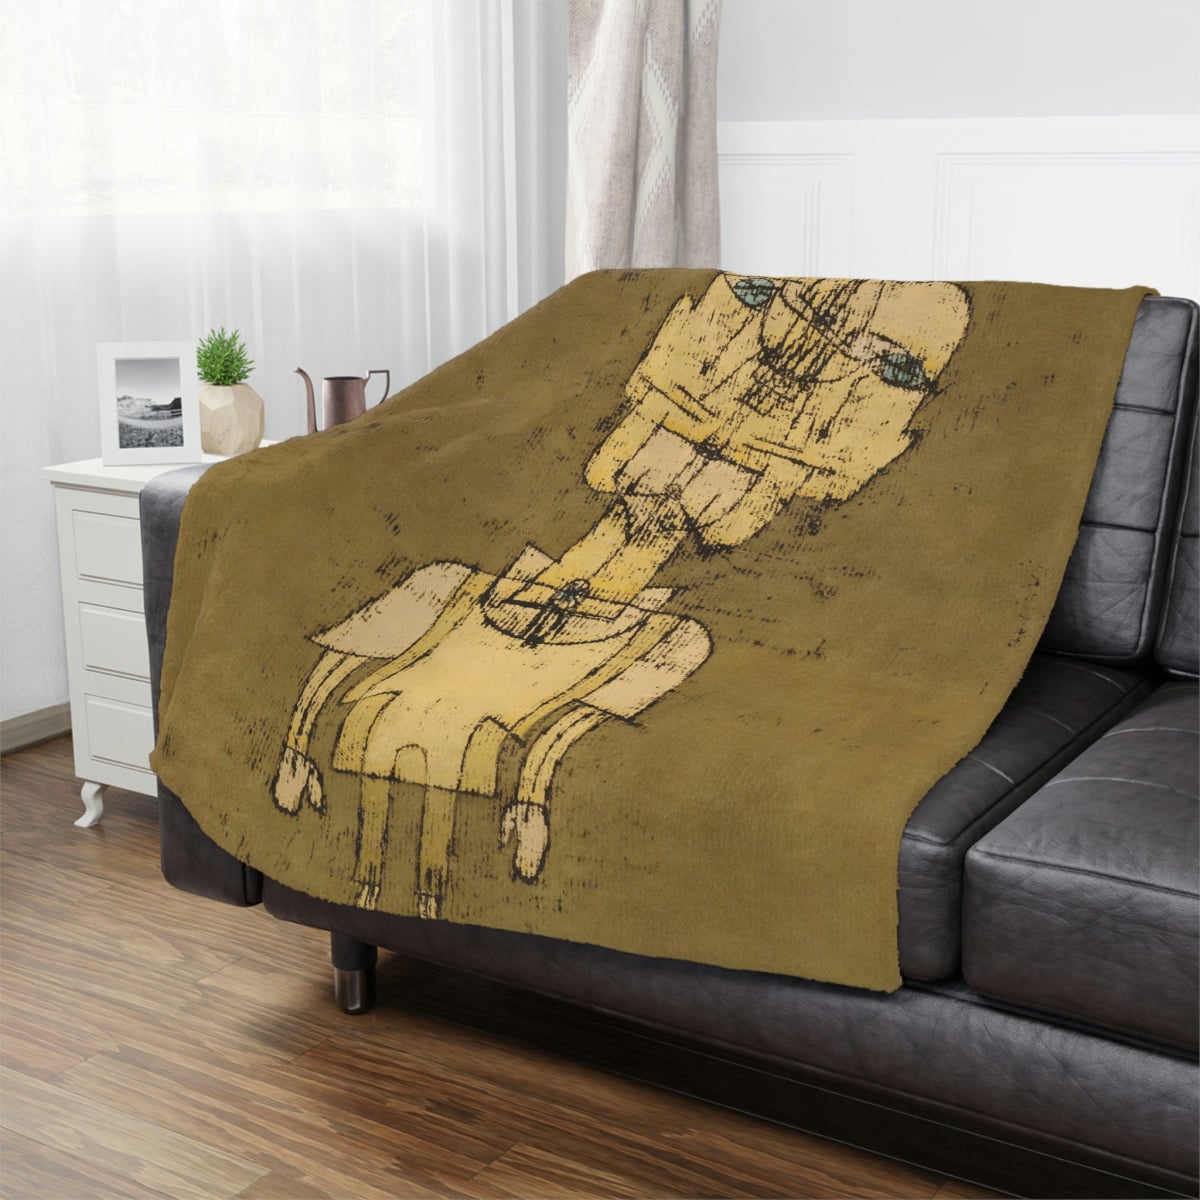 Dreamlike Charm in Home Decor - Surreal Blanket